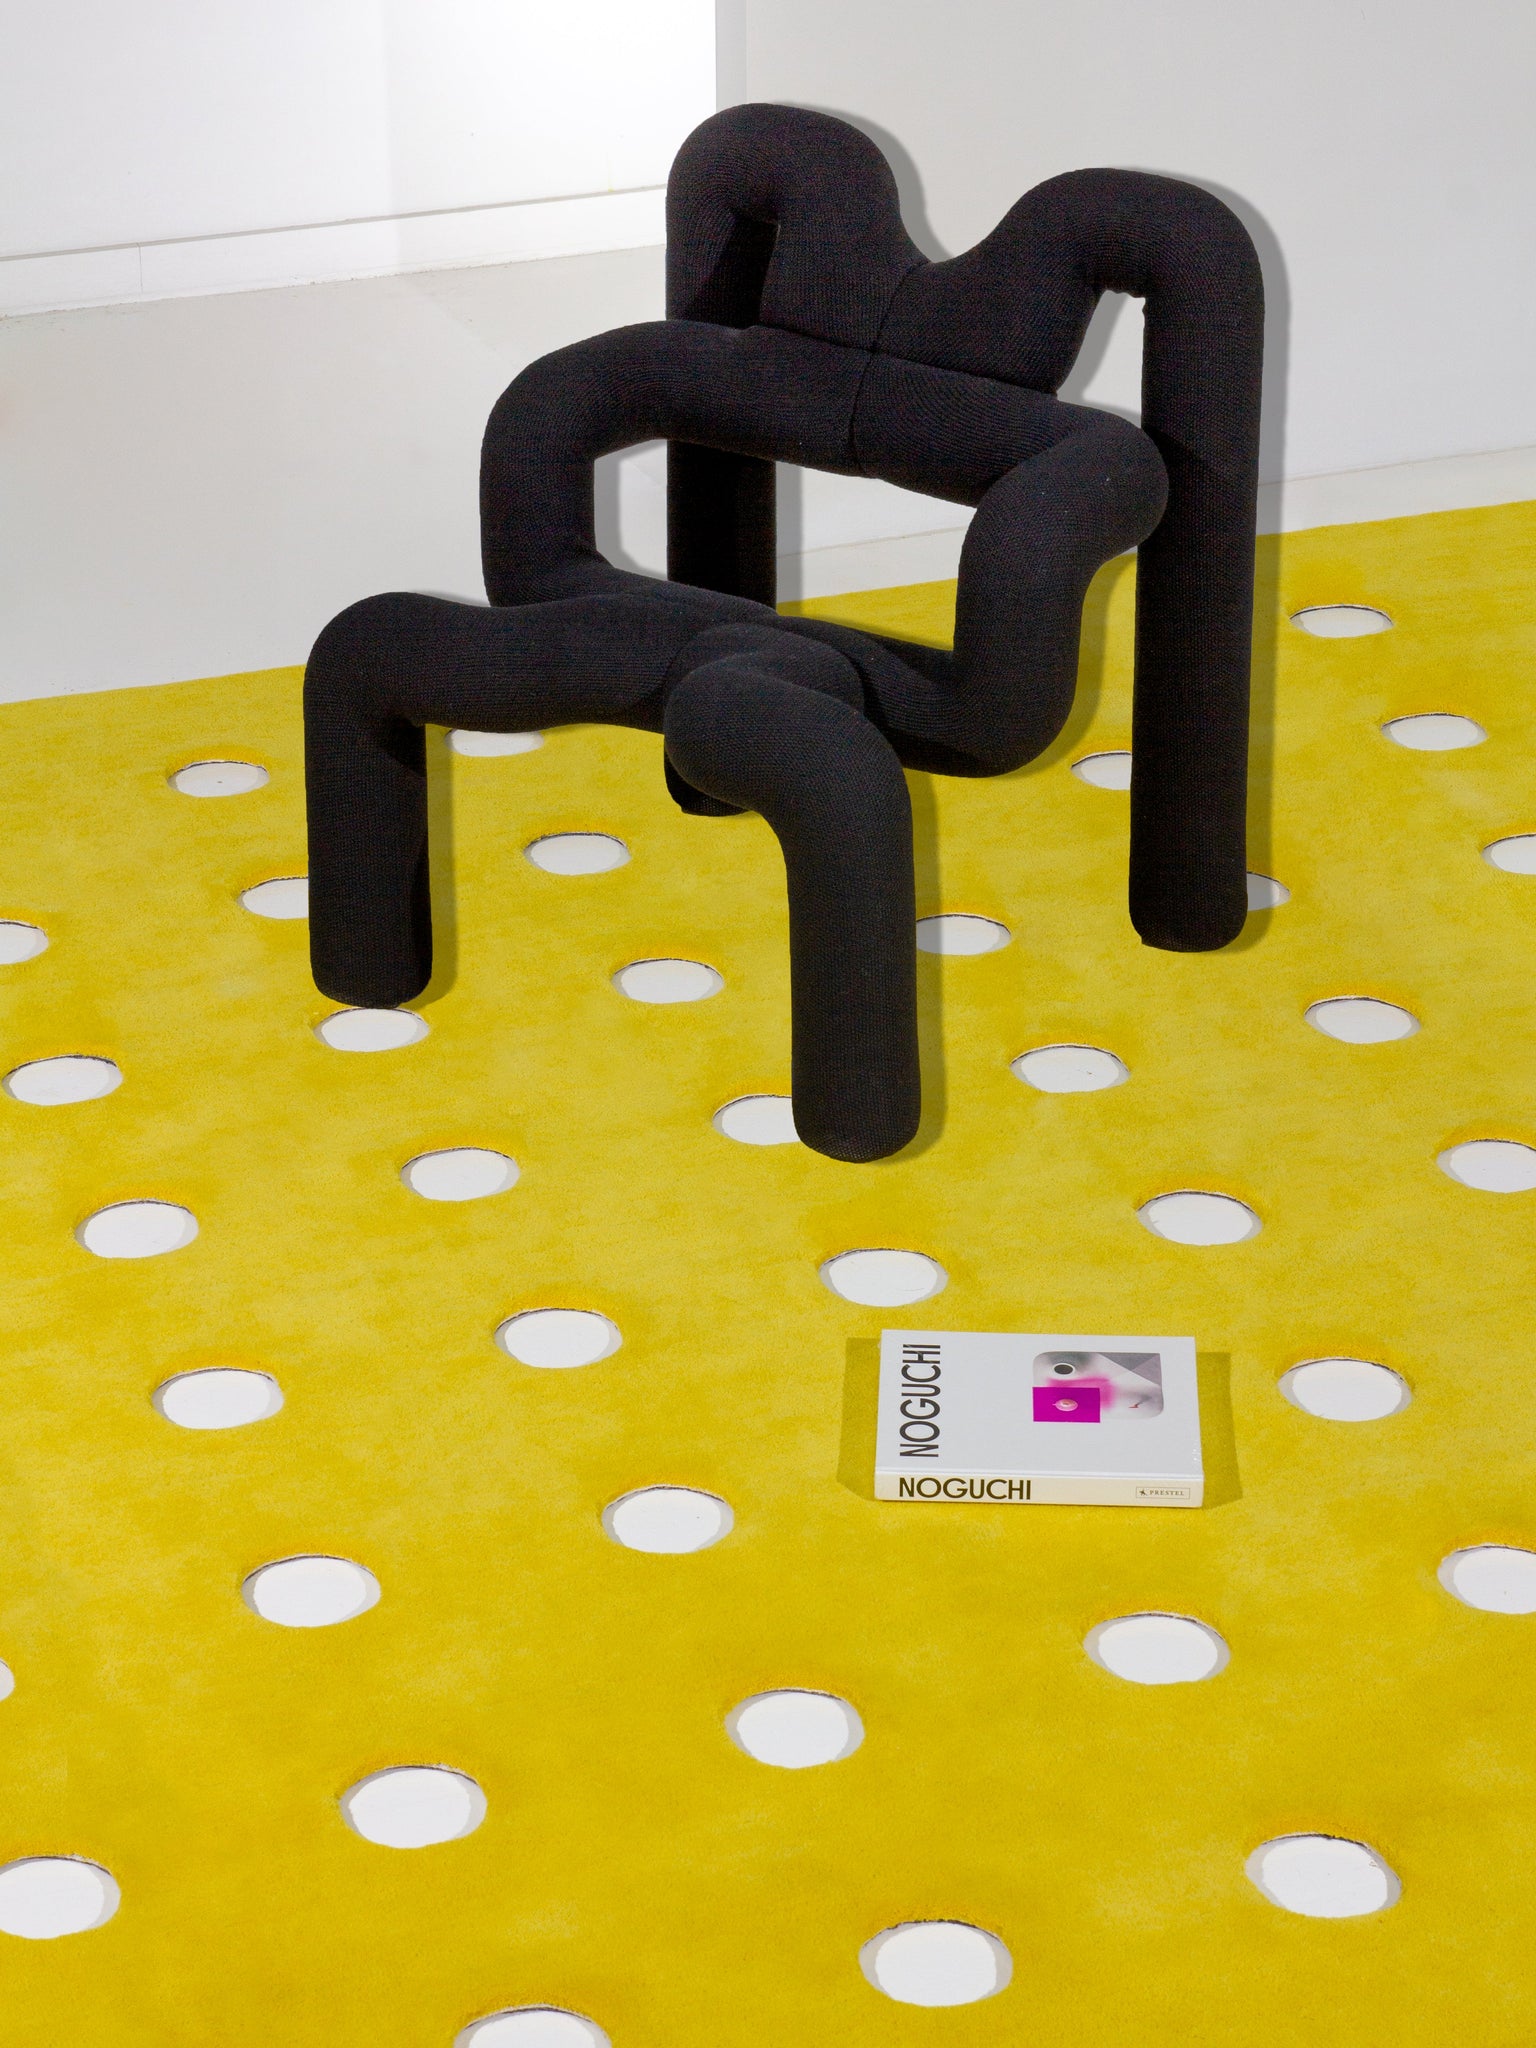 Ekstrem Chair by Terje Ekstrøm - Bi-Rite Studio